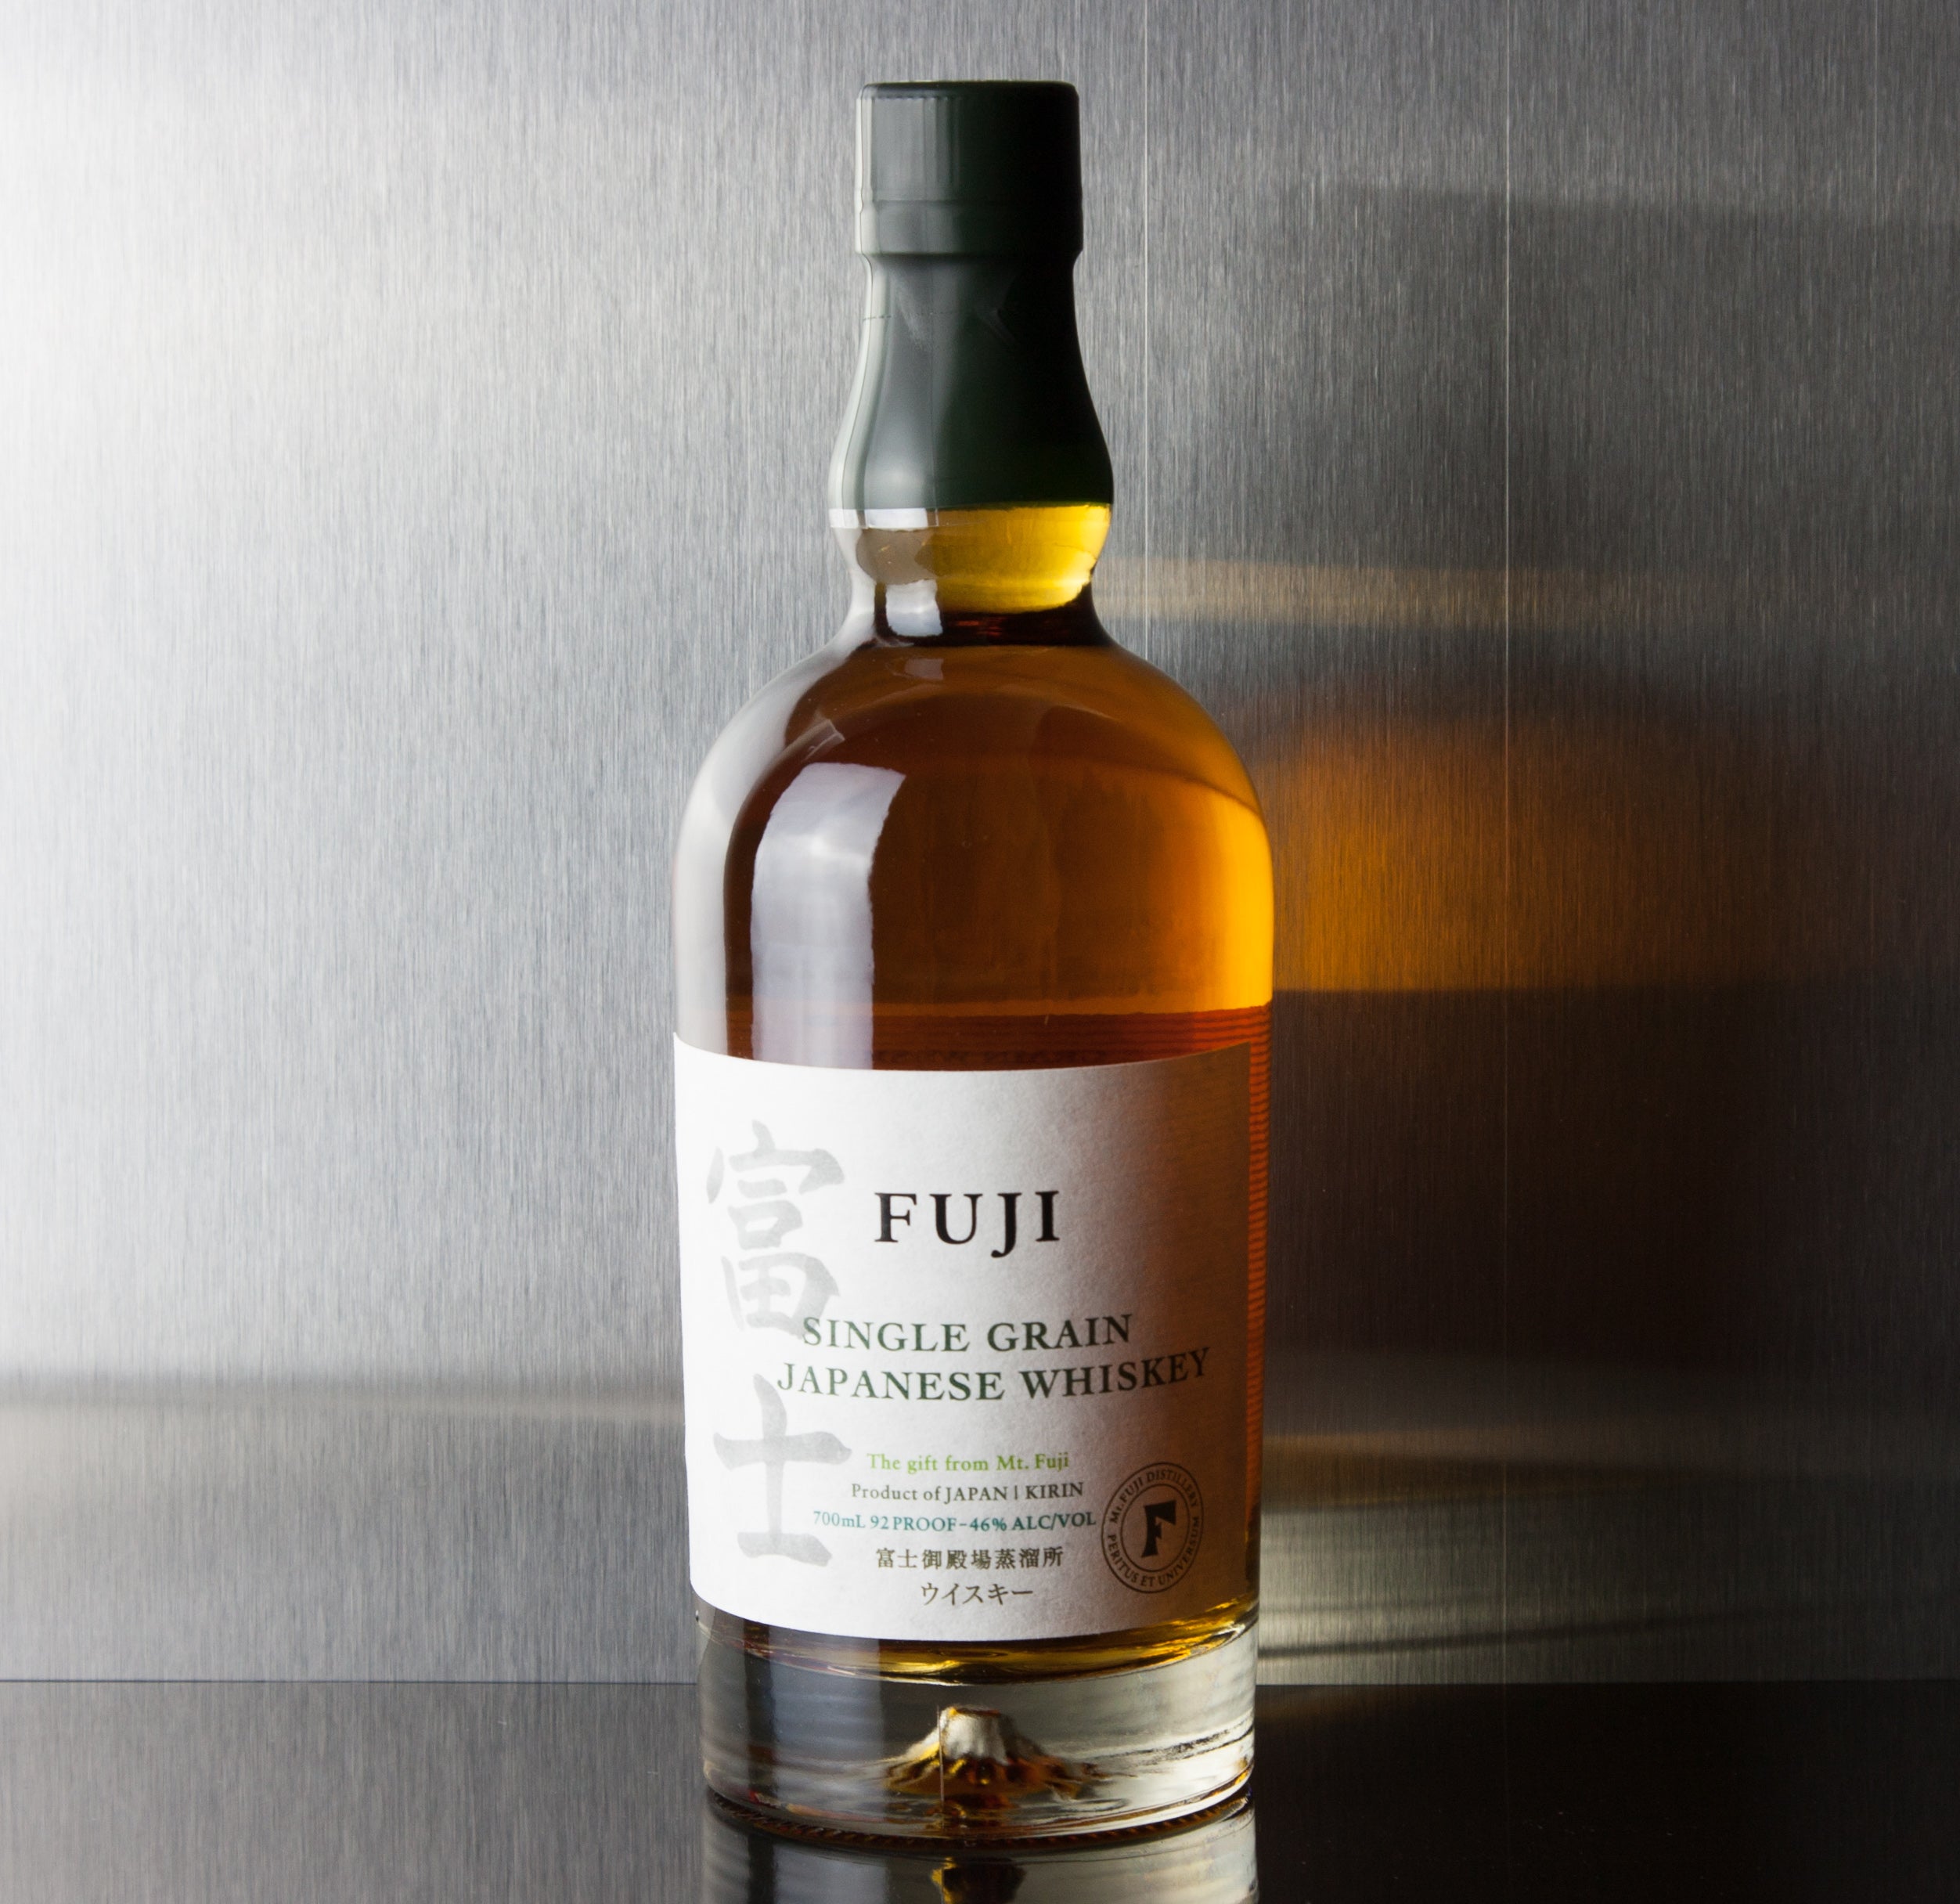 Fuji Single Grain Whisky